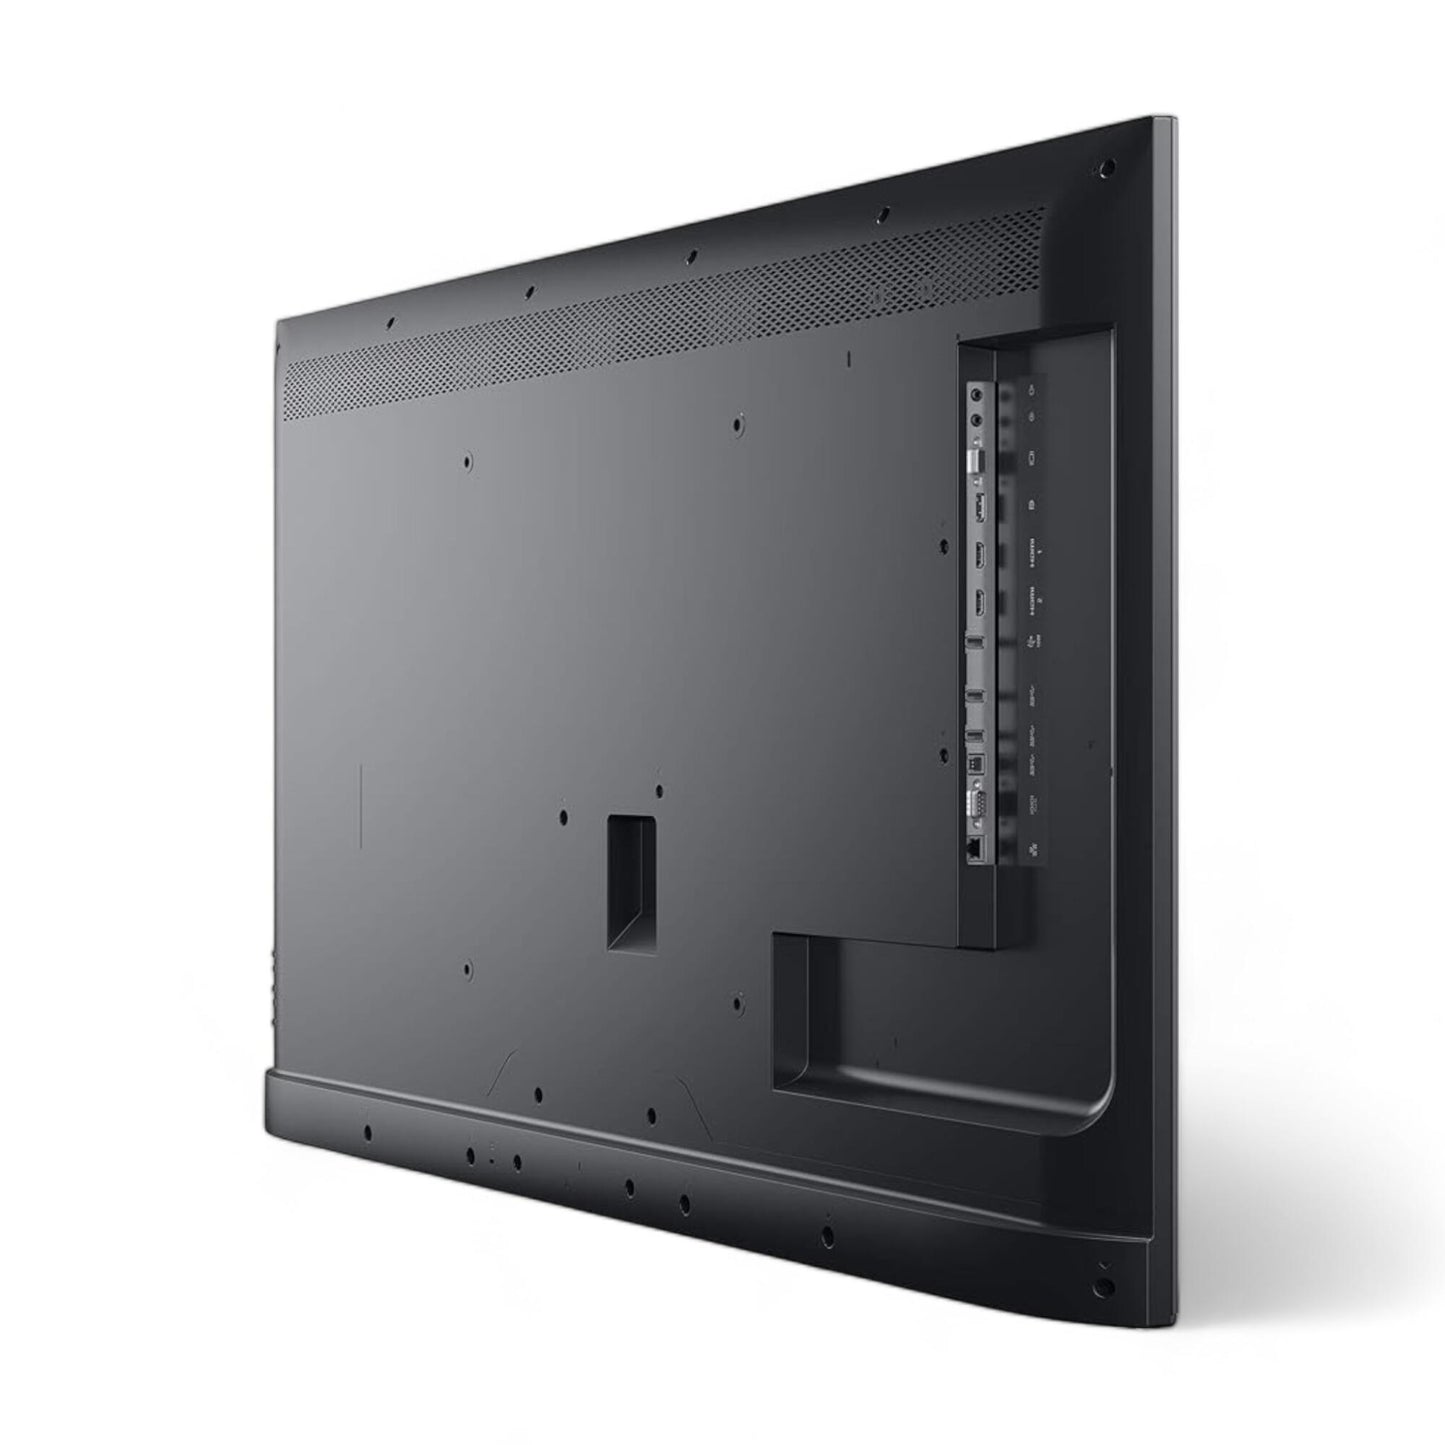 Dell C Series C5519Q 54.64-Inch Screen Led-Lit Monitor